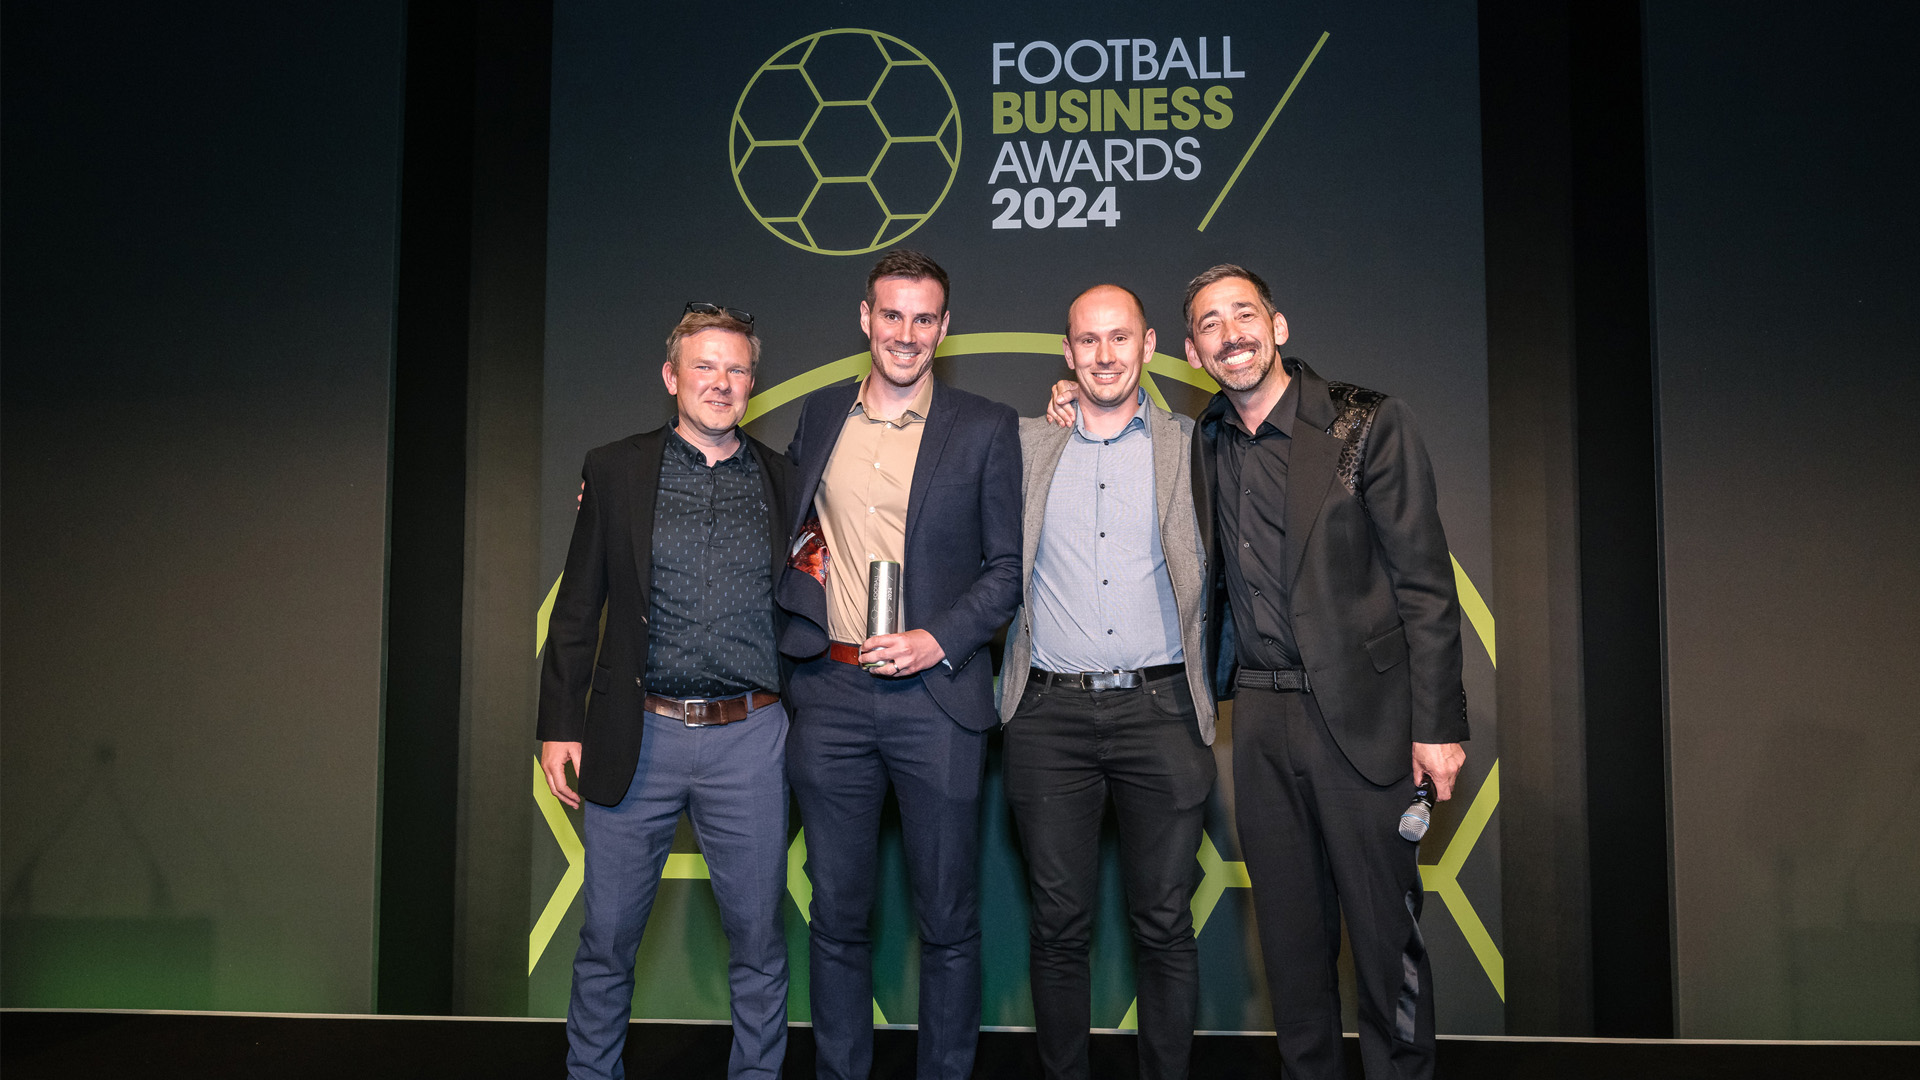 EitC's Steve Morgan Foundation Partnership Wins Gold At Football Business Awards